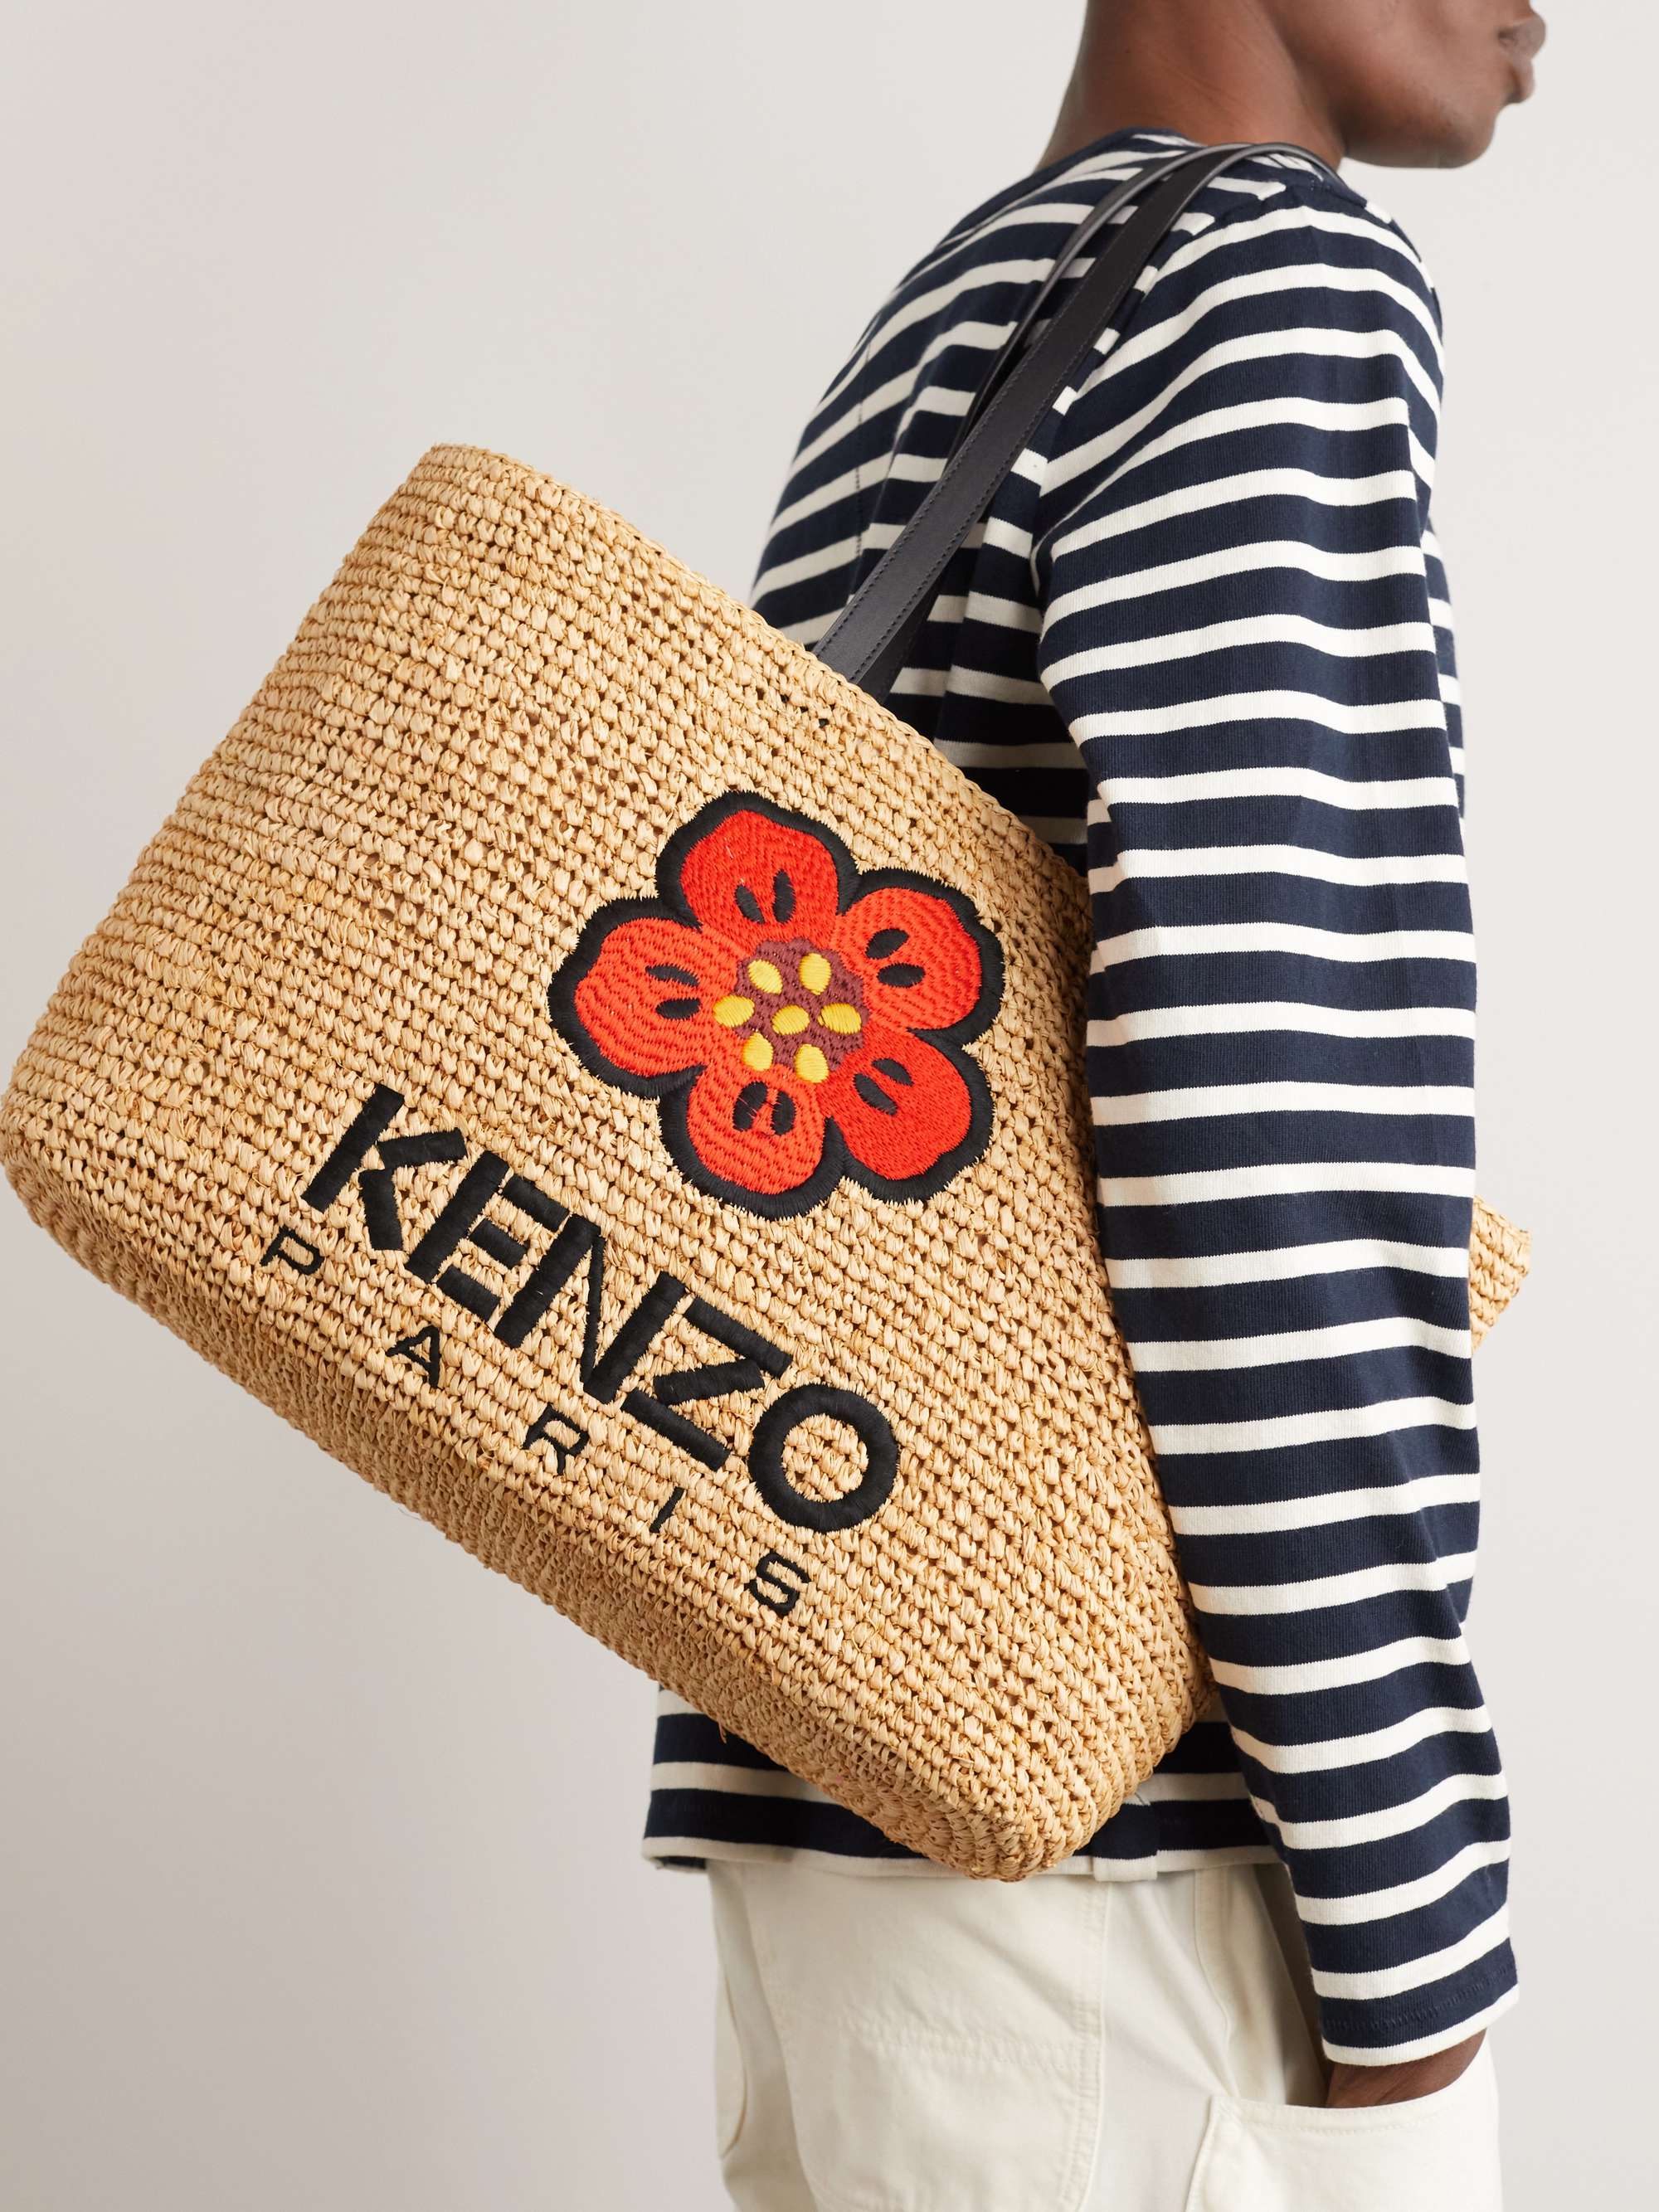 KENZO Large Embroidered Leather-Trimmed Raffia Tote Bag | MR PORTER